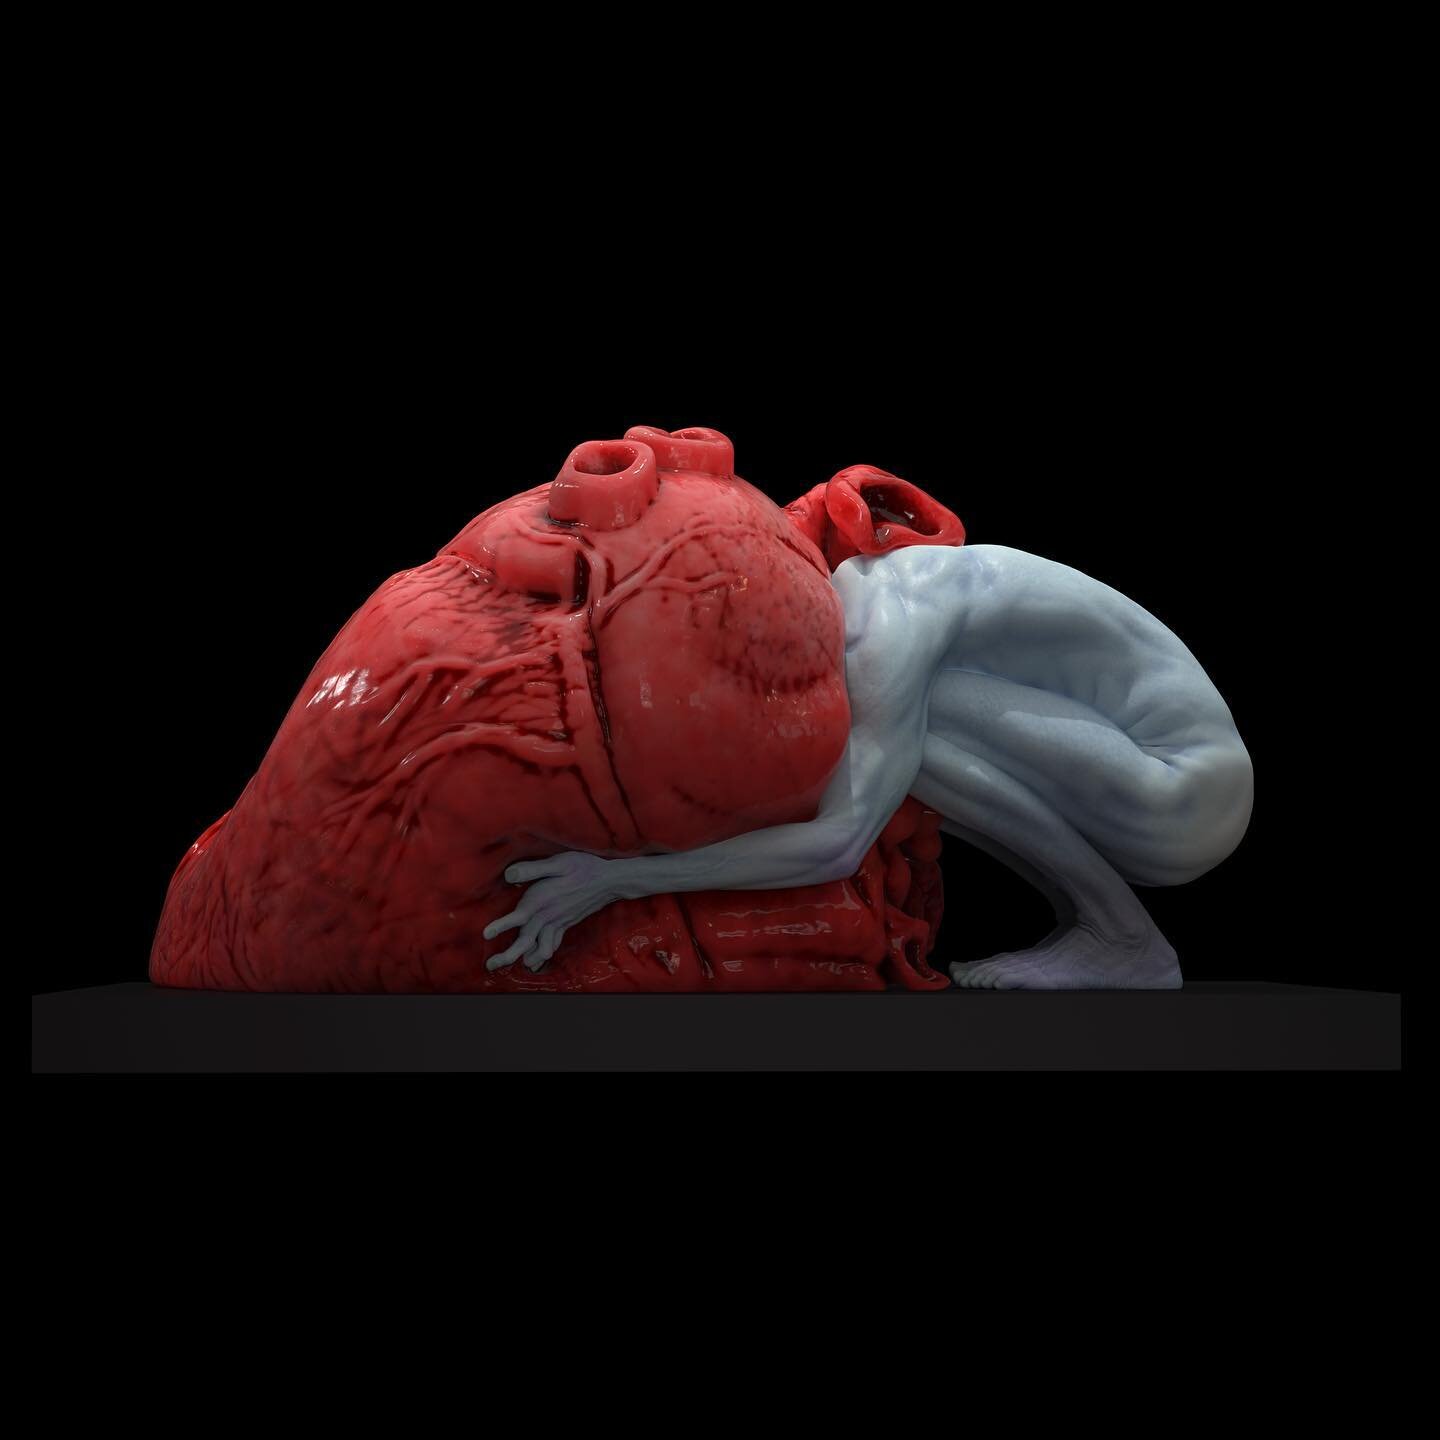 The MaskHeart  #art #sculpture #sculptra #anatomy #heart #figurativeart #zbrushmodel #chavant #sculpey #pixologiczbrush